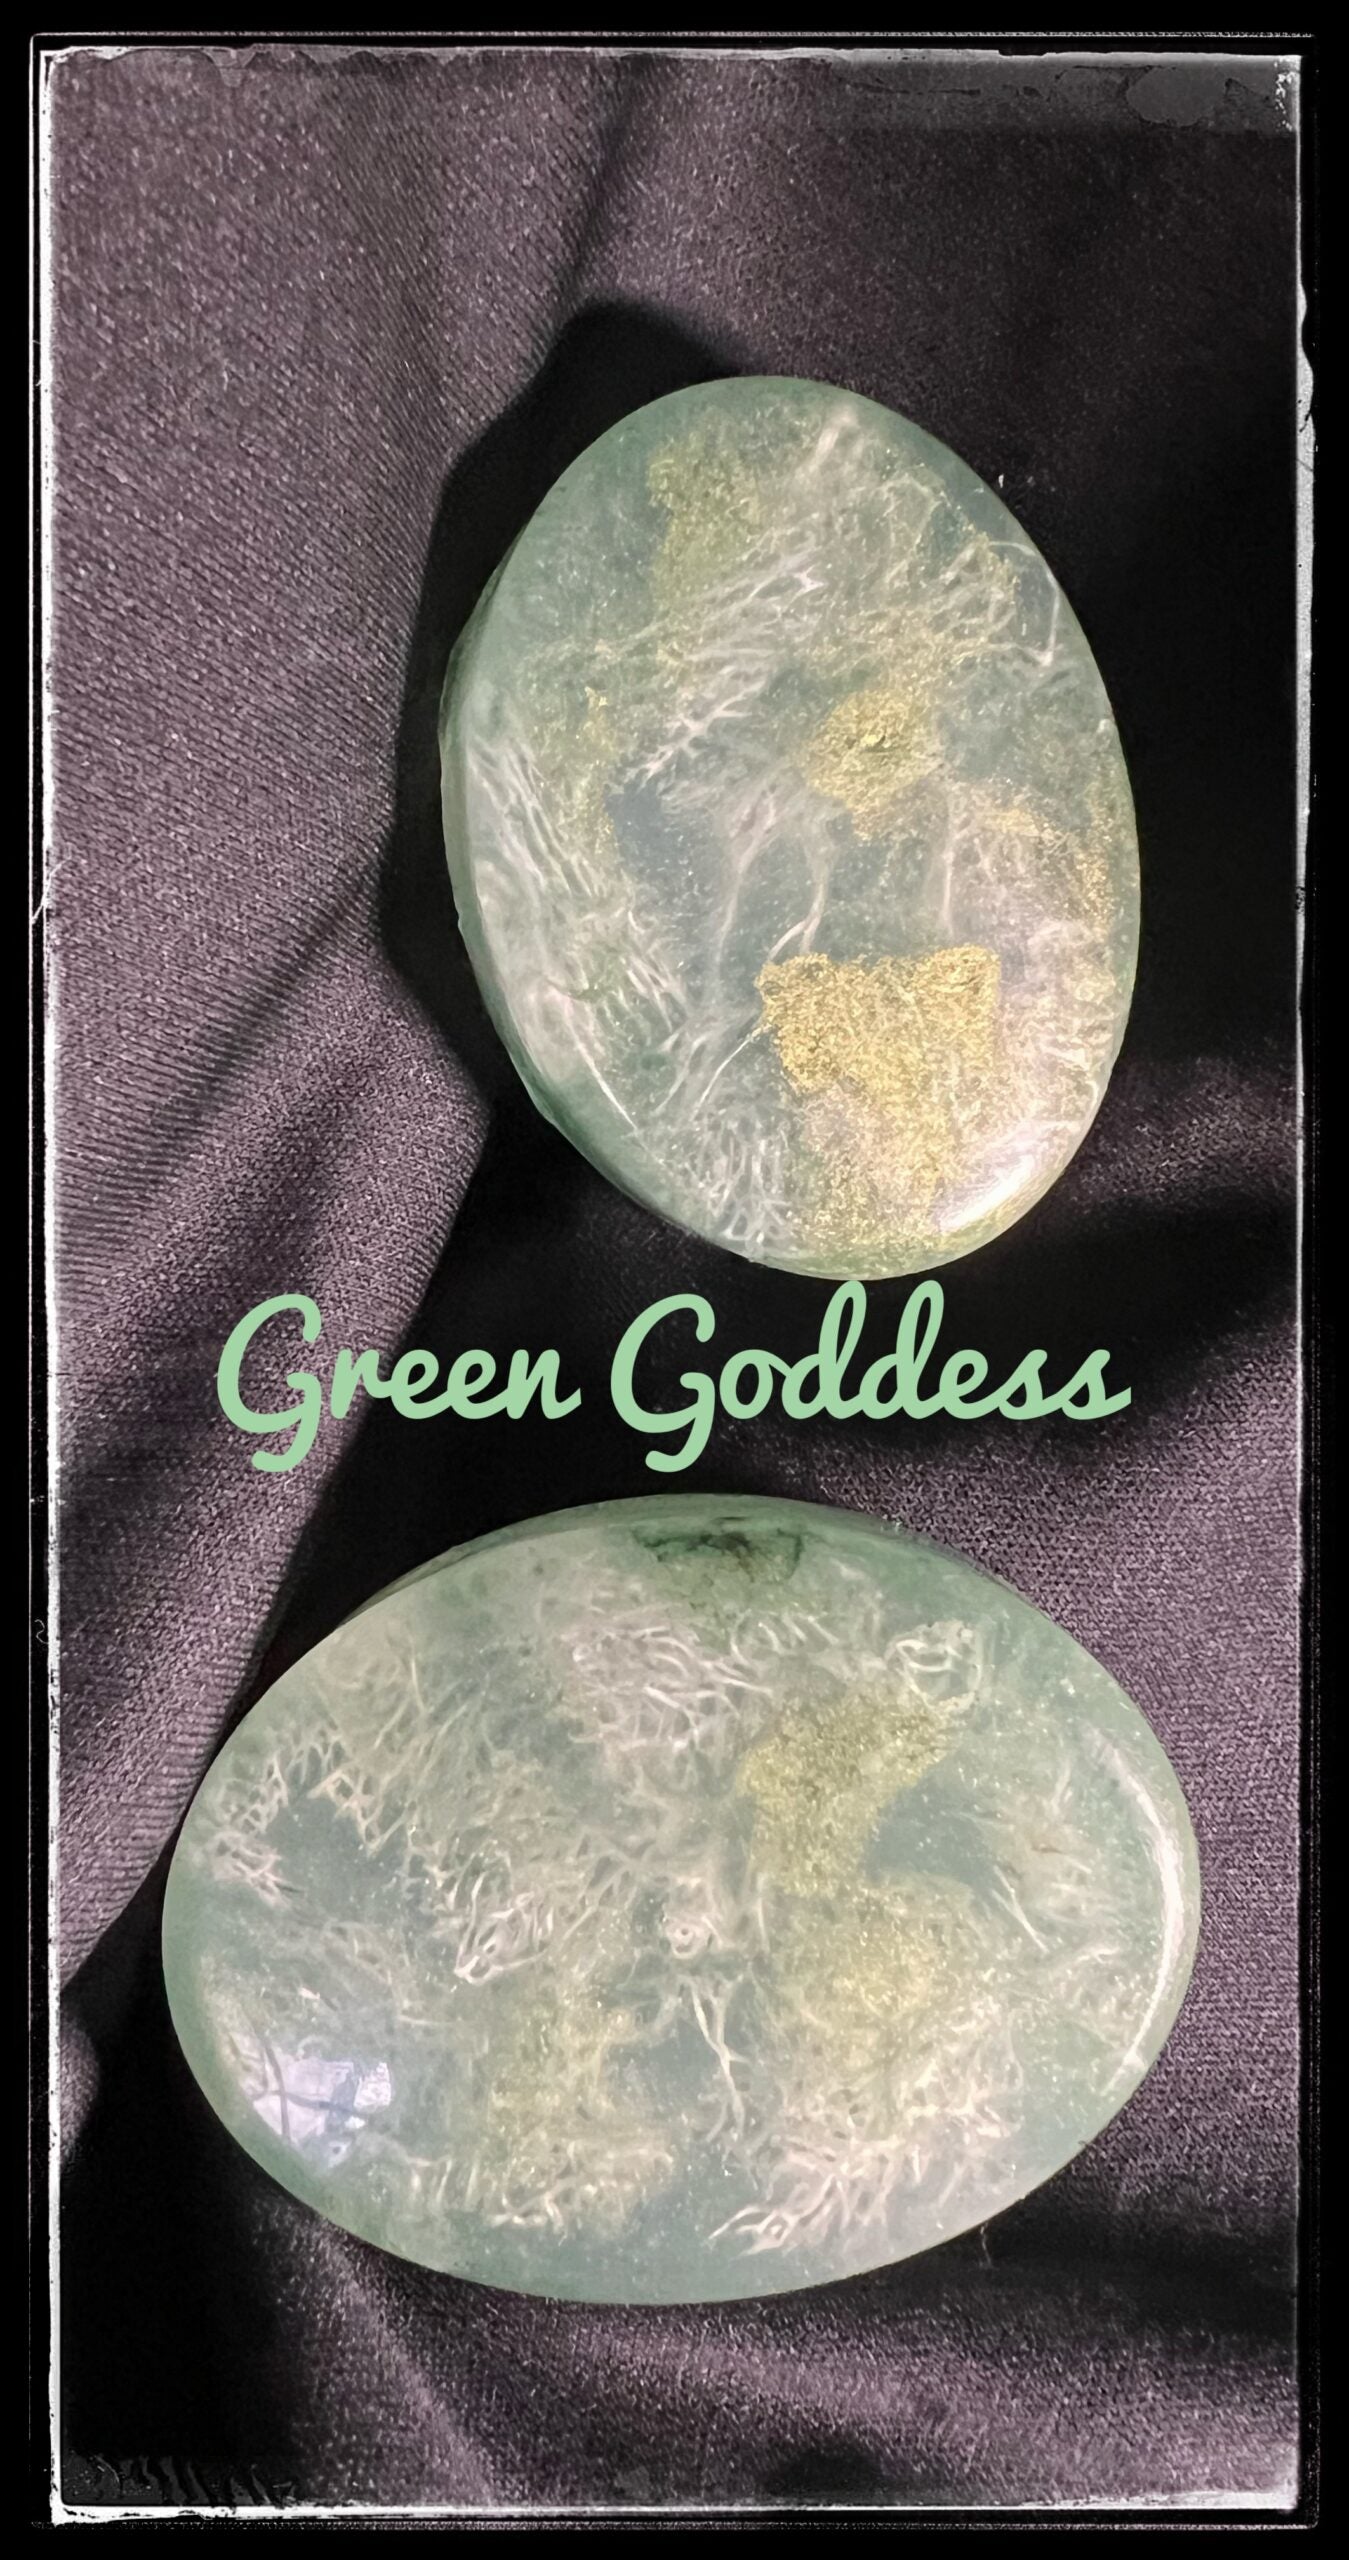 Green Goddess Loofah Glycerin Soap